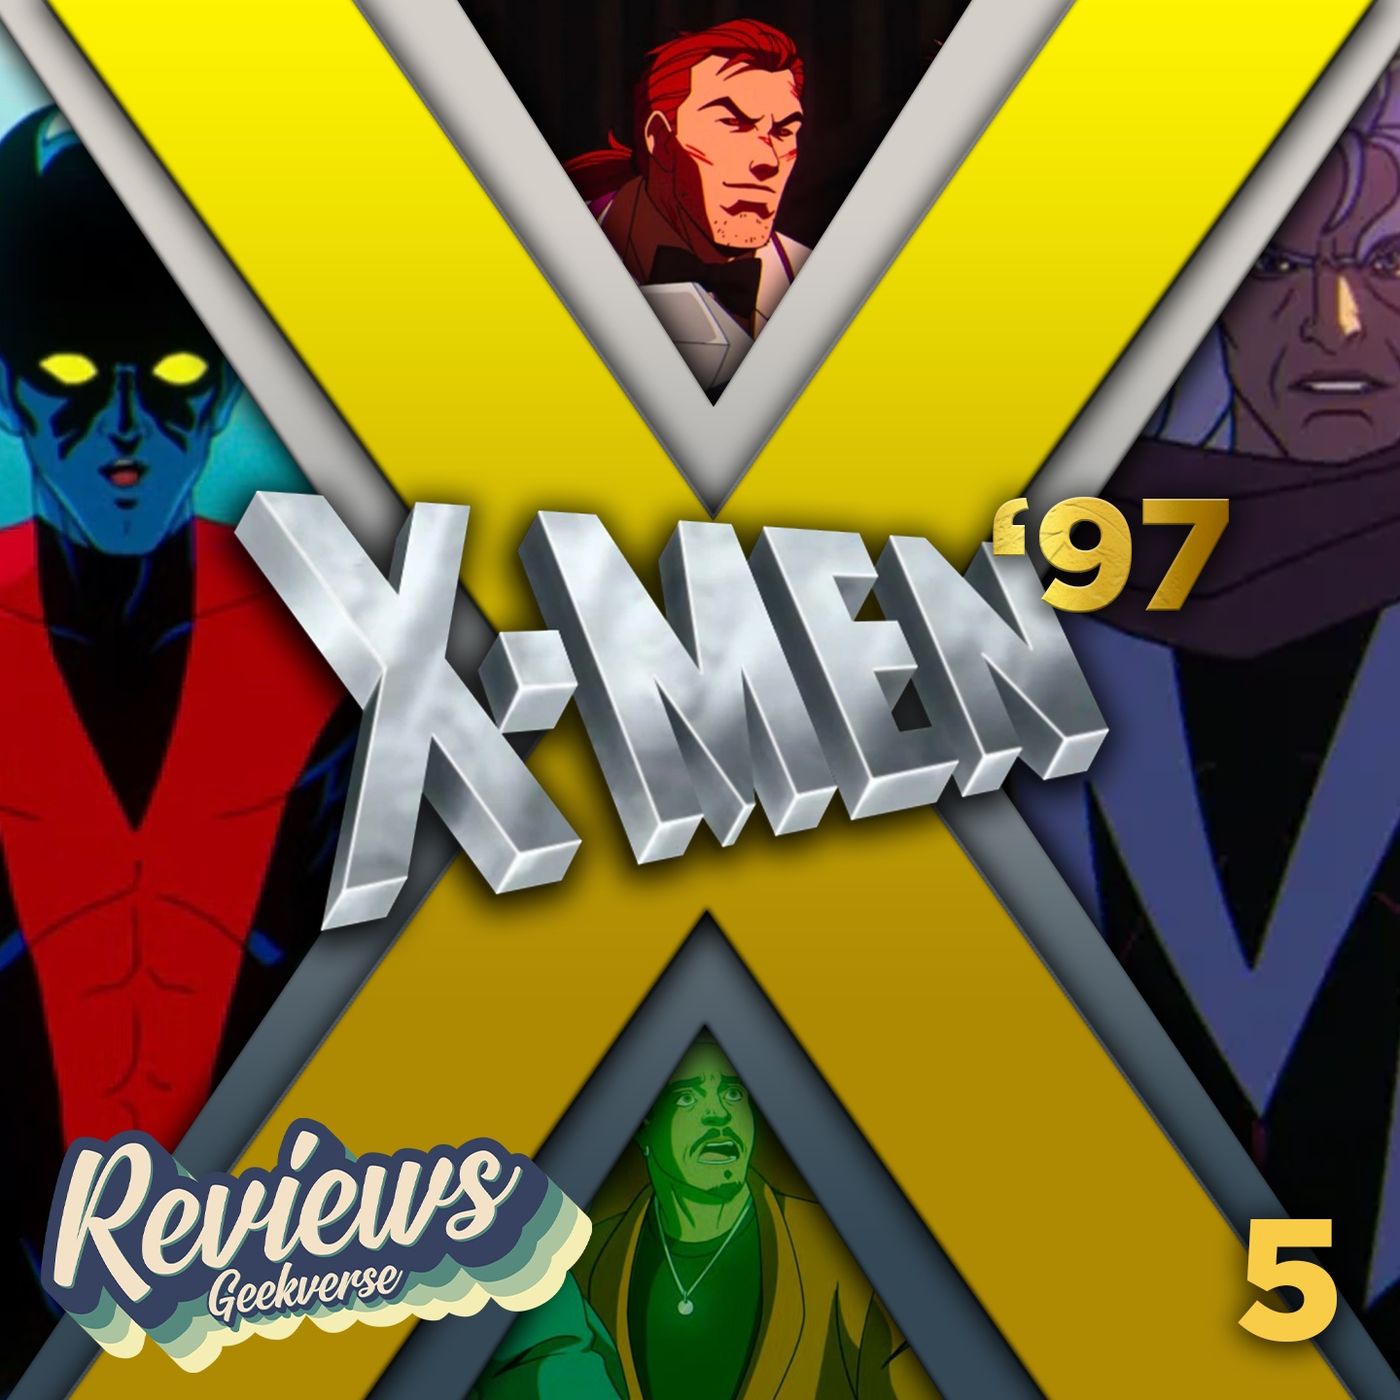 X-Men 97 Episode 5 Spoilers Review